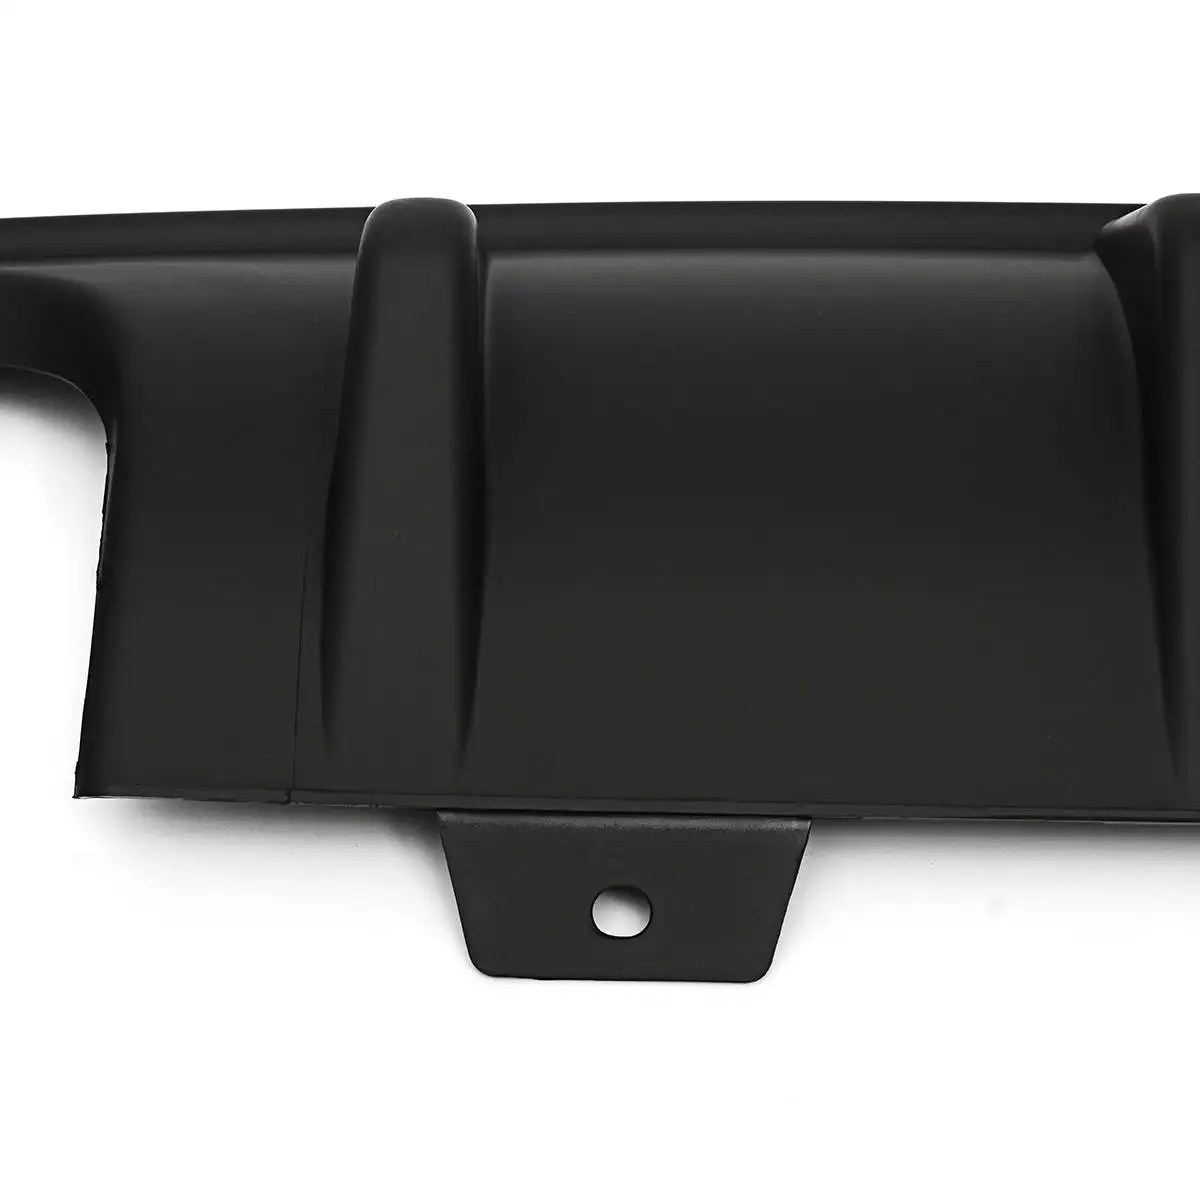 sport tail rear bumper size splitters diffuser lip for honda for civic 2016 2017 sedan jdmrsturbo exterior part free global shipping